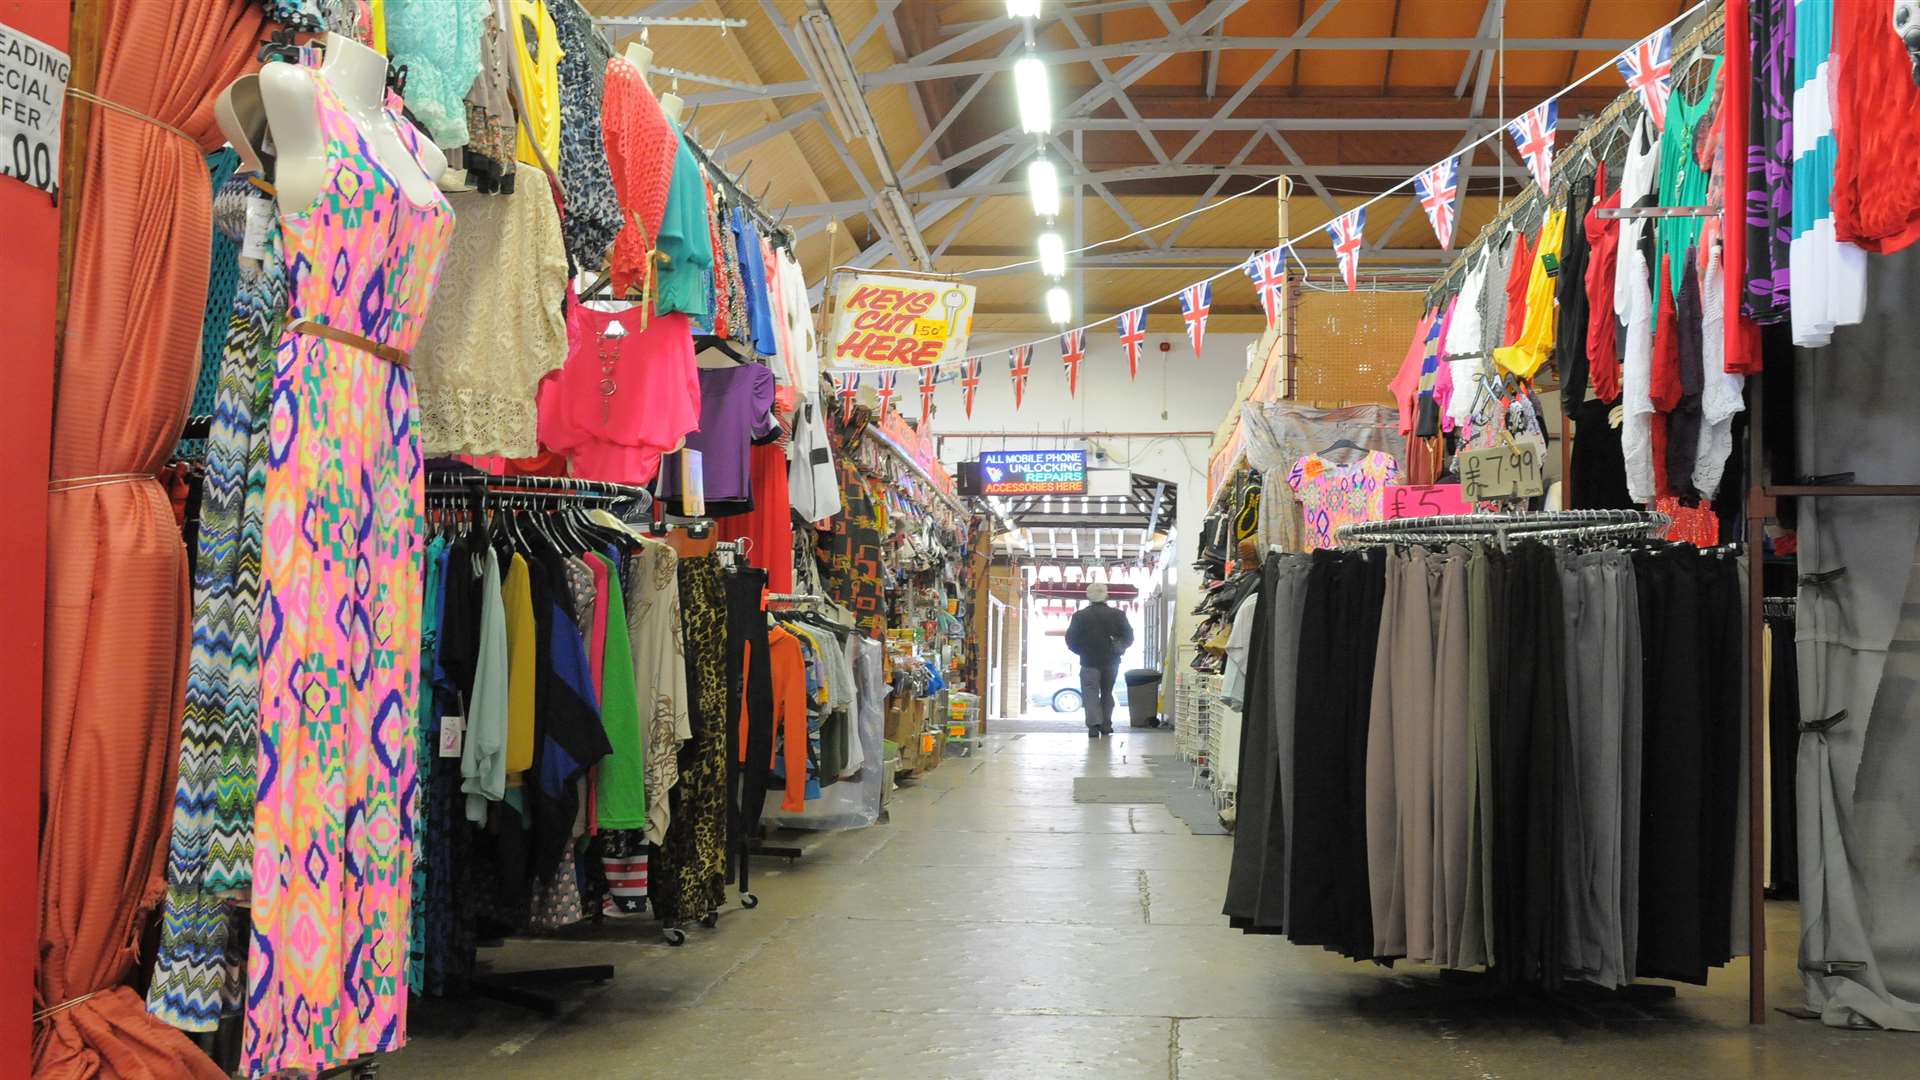 Gravesend Market before regeneration work began in 2015